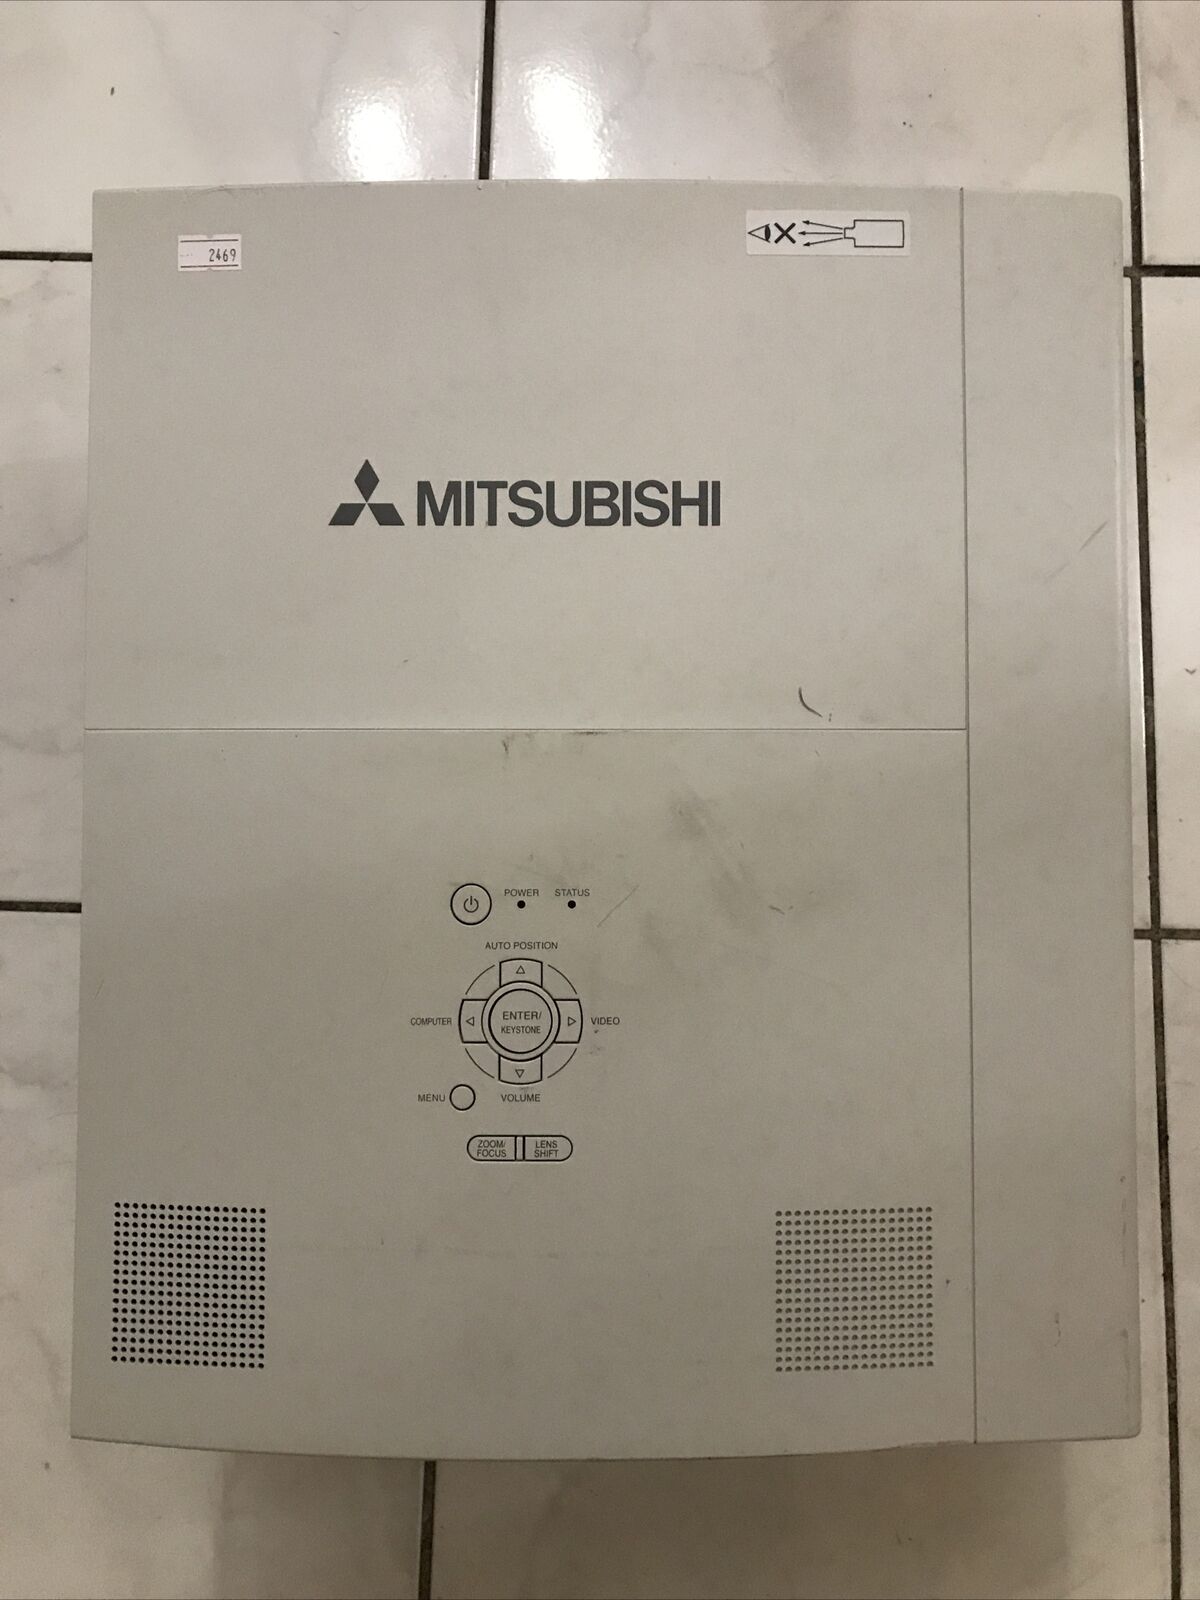 Mitsubishi FL7000U FULL HD 1080P PROJECTOR, 5000 LUMENS, LOW 2469 HOURS Tested